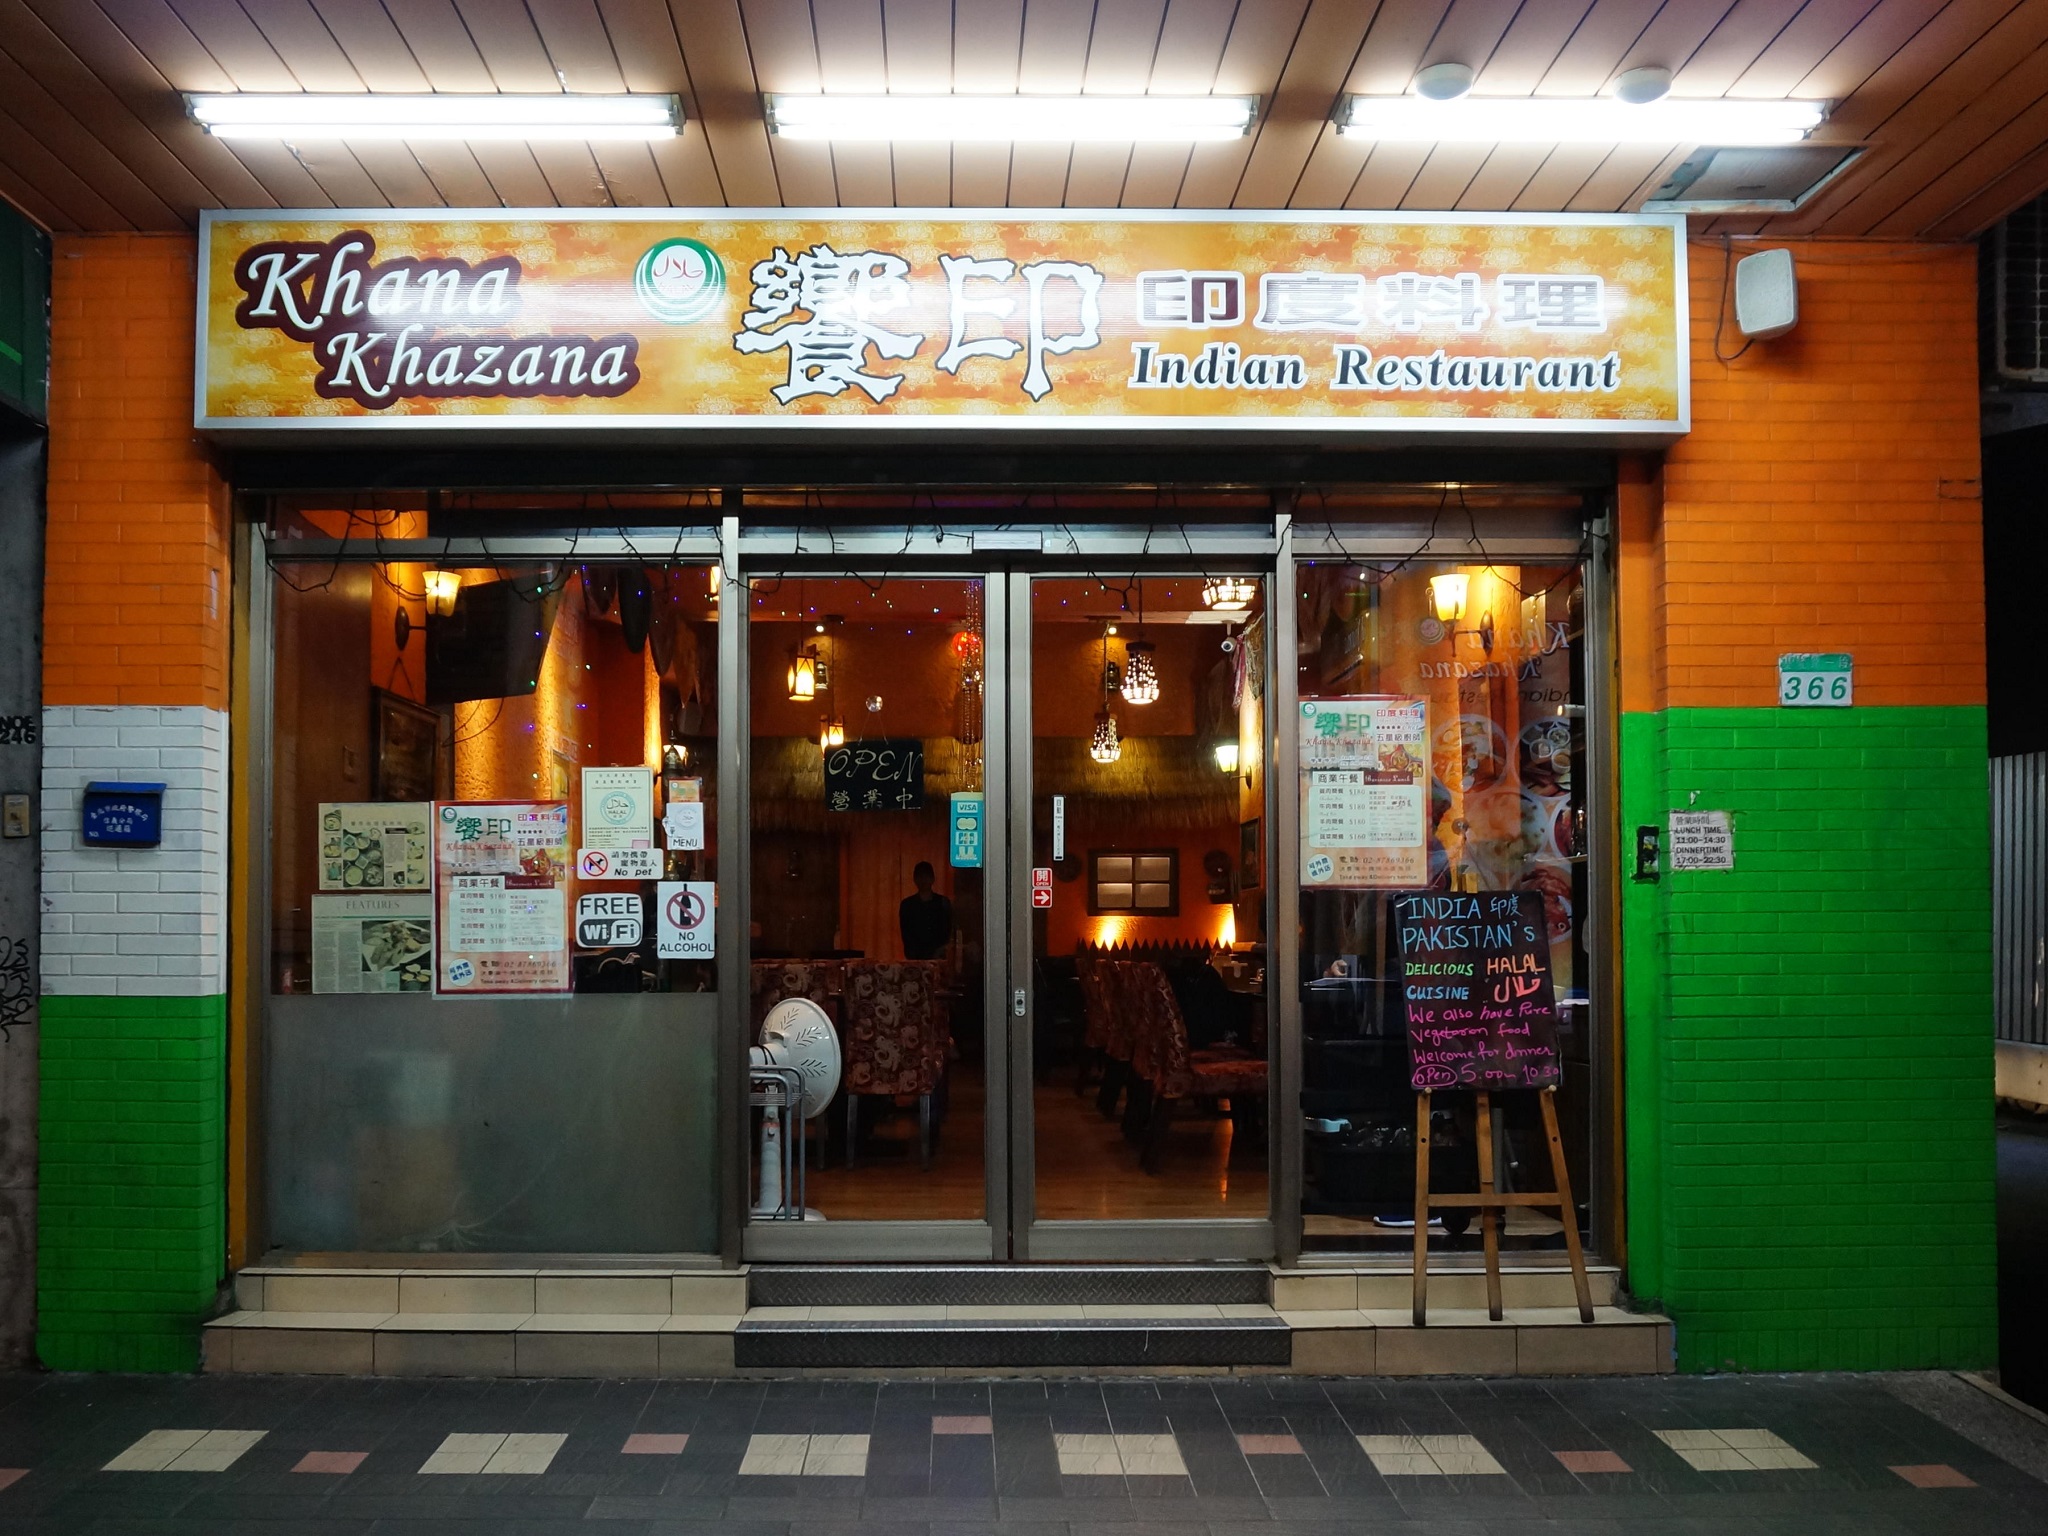 Khaazana Indian Restaurant - Best restaurant for Halal food in Hanoi